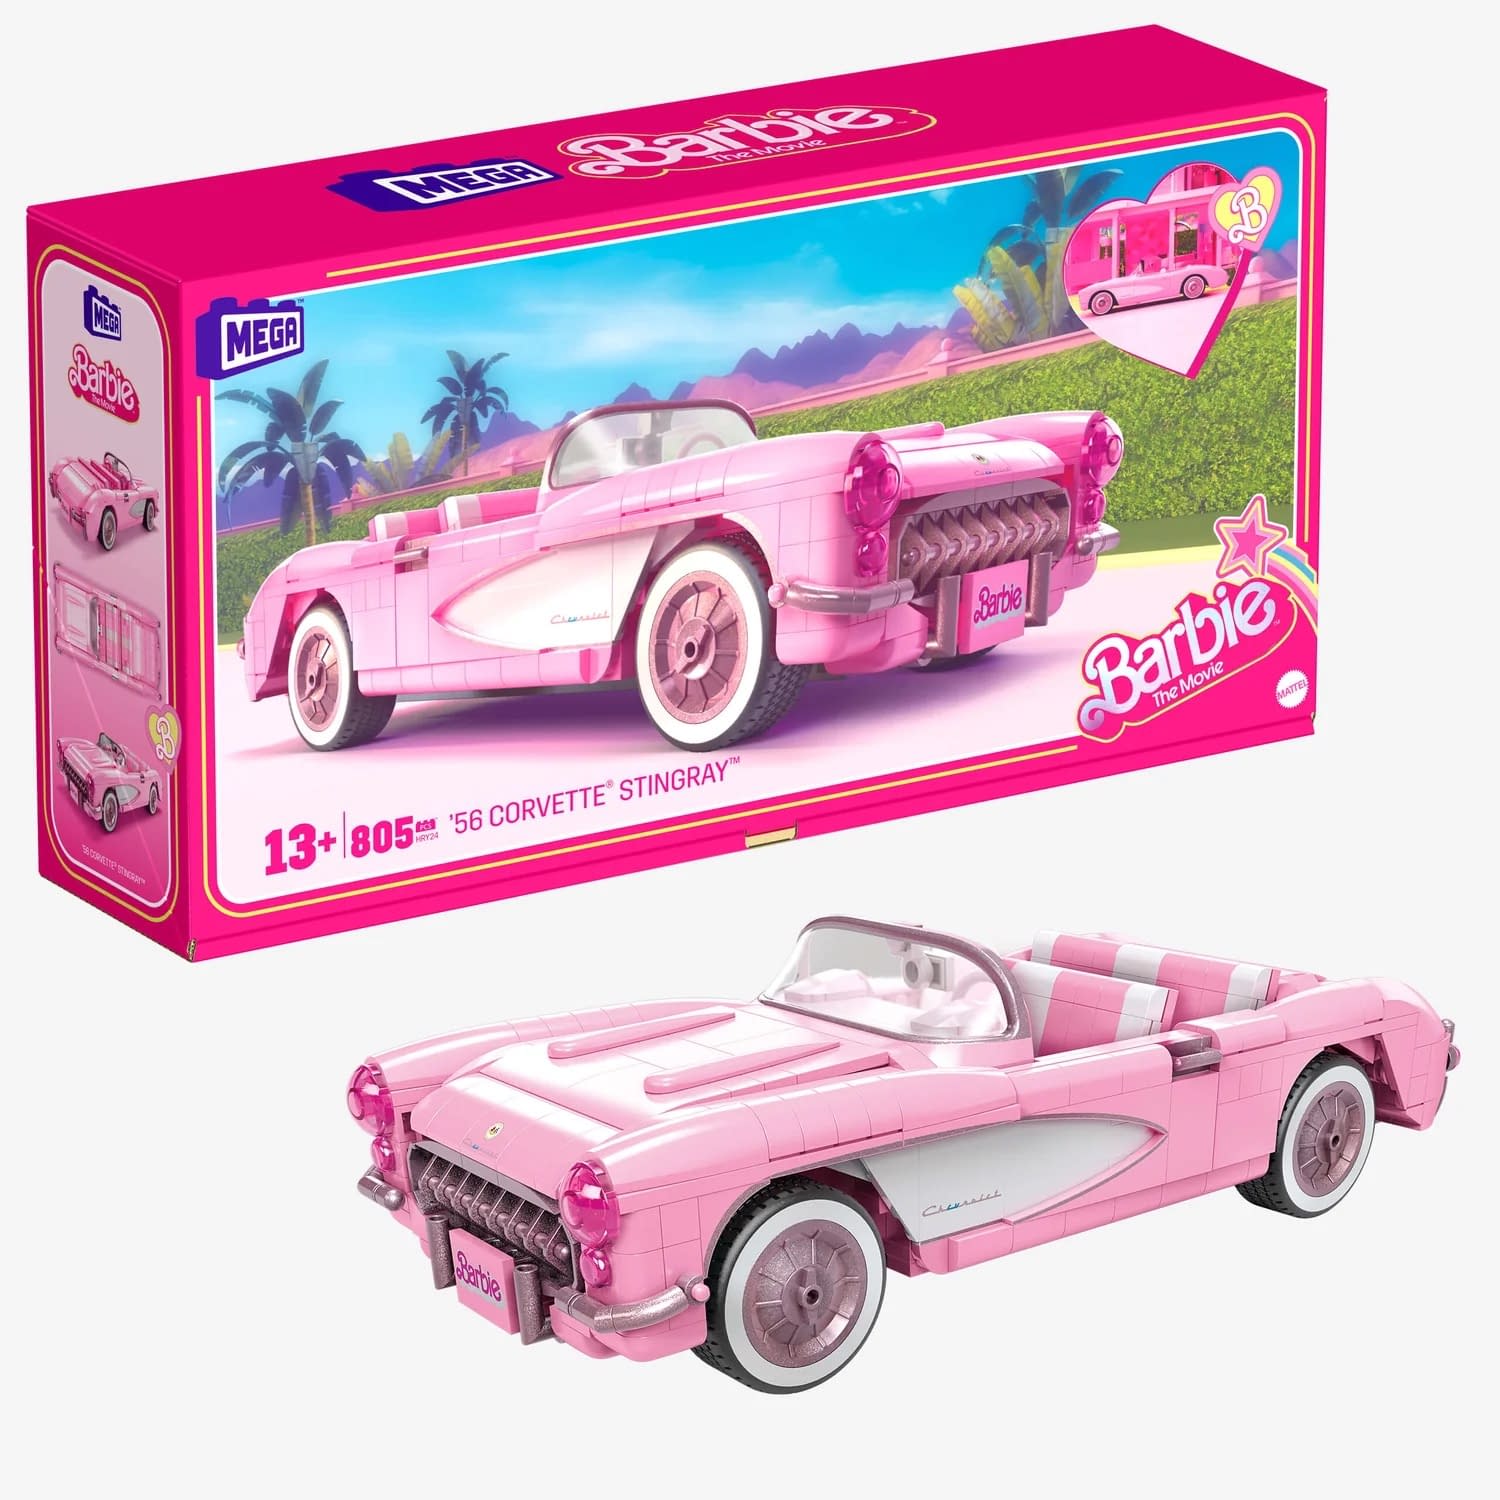 Mattel Drives in with MEGA Barbie The Movie '56 Corvette Stingray Set0